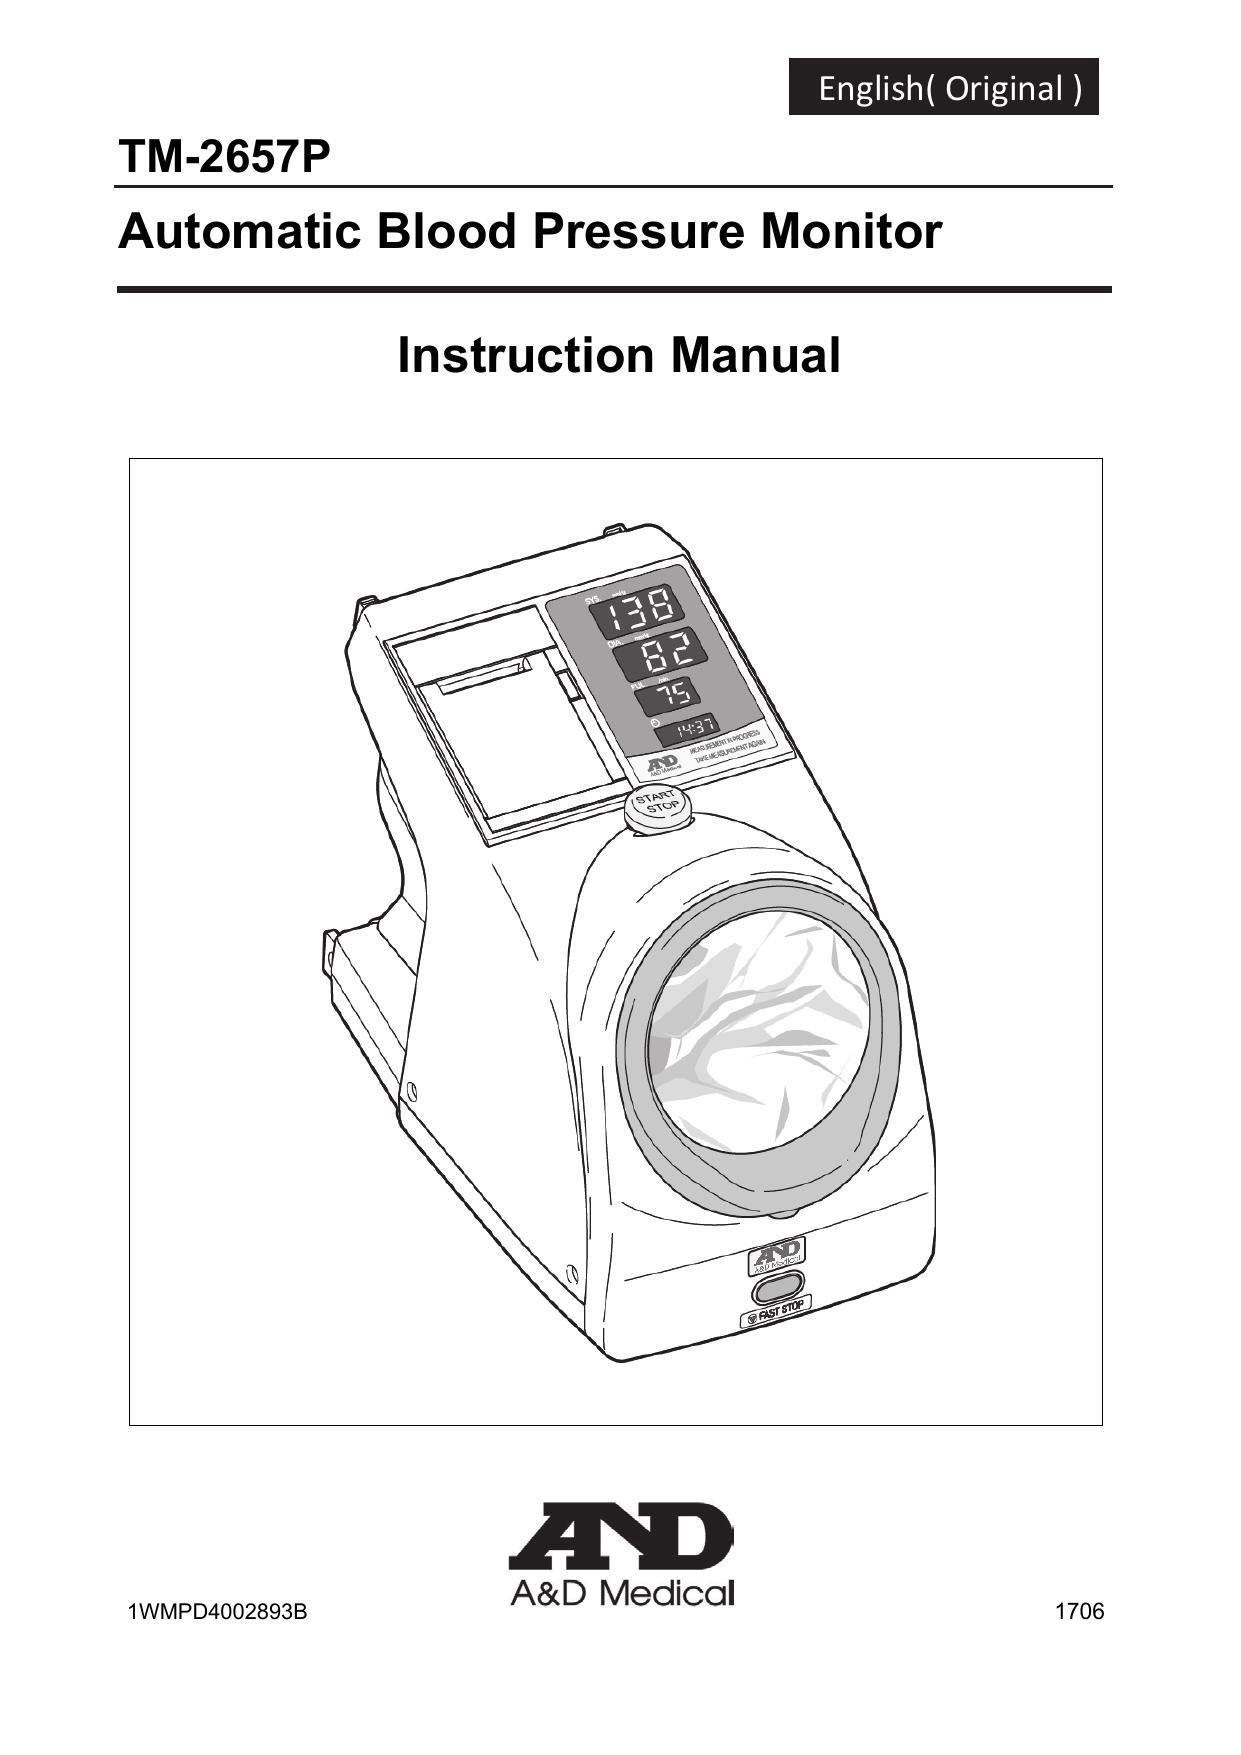 tm-2657p-automatic-blood-pressure-monitor-instruction-manual.pdf